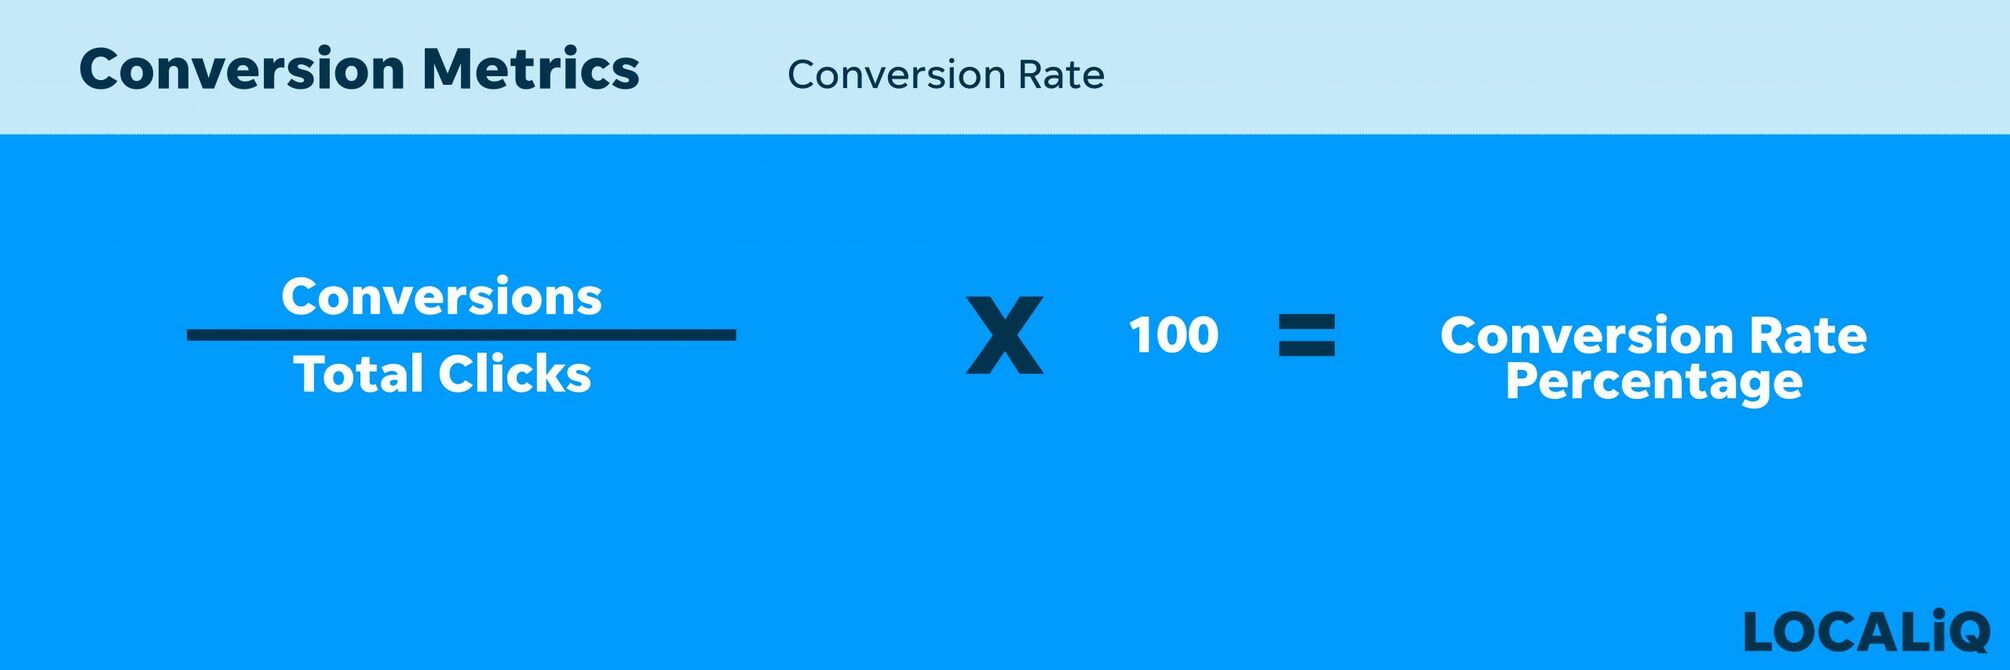 Conversion Metrics| Conversion Rate.